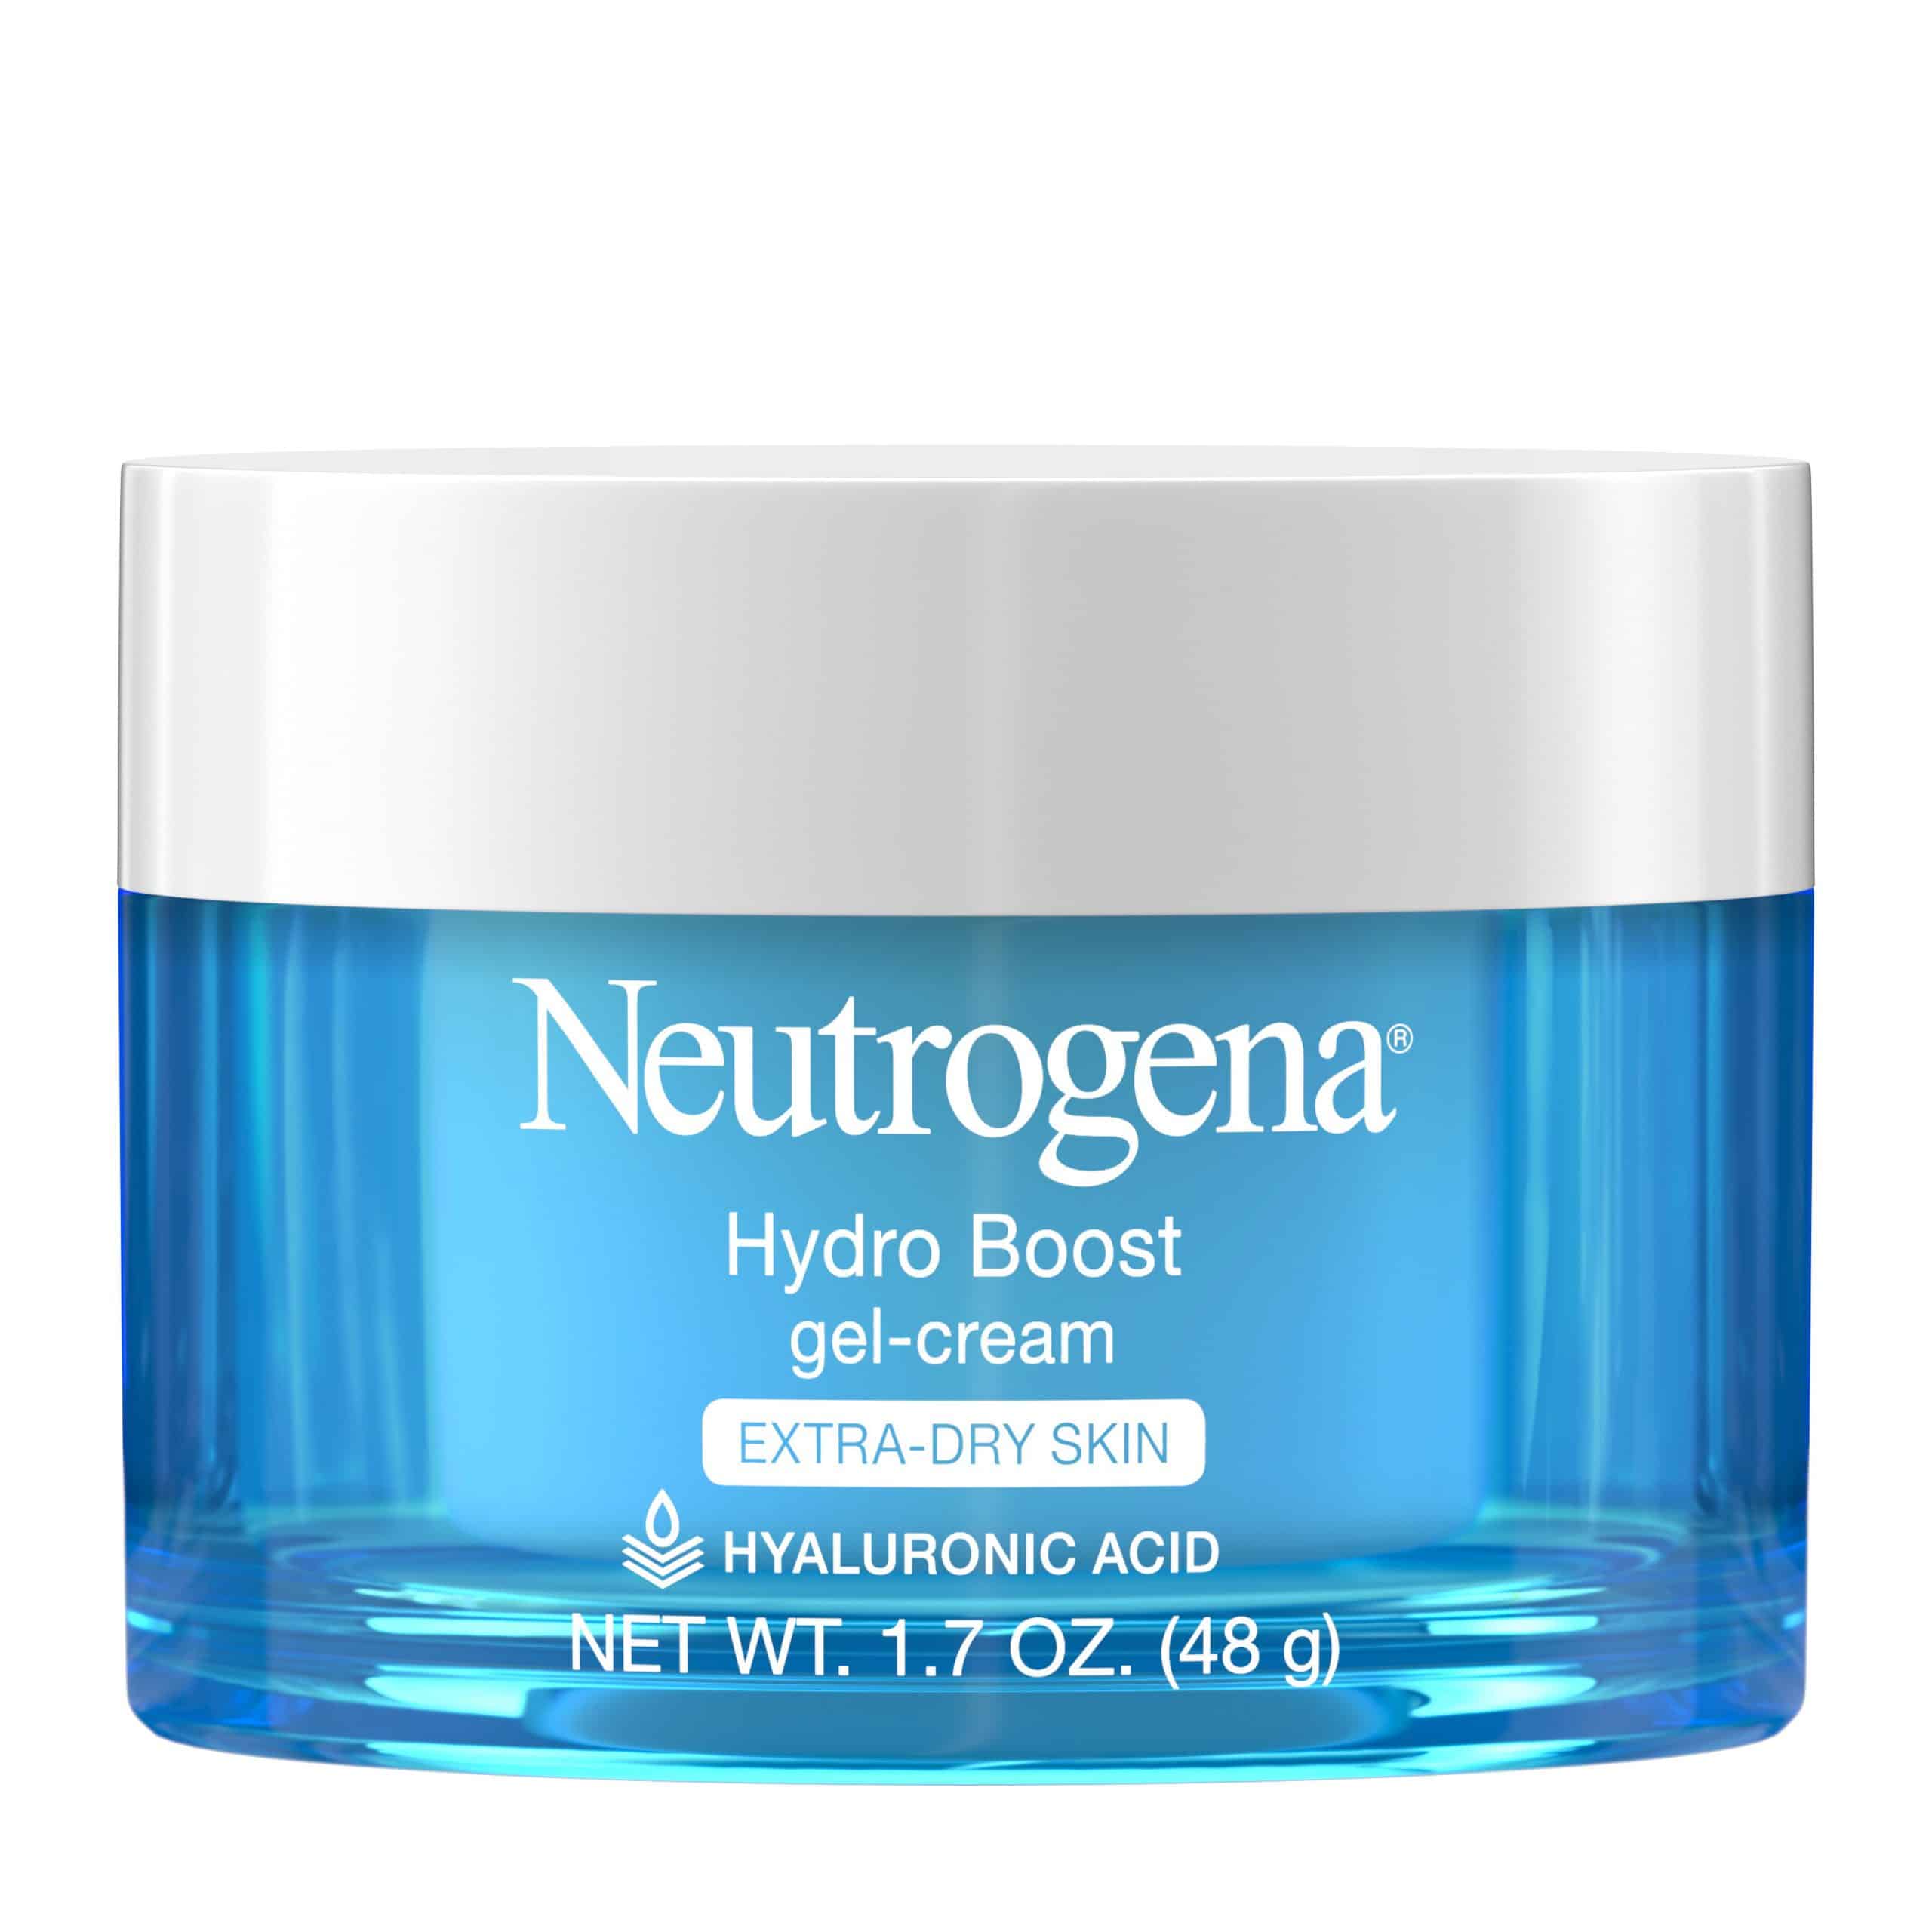 Neutrogena Hydro Boost Gel Face Moisturizer for Extra